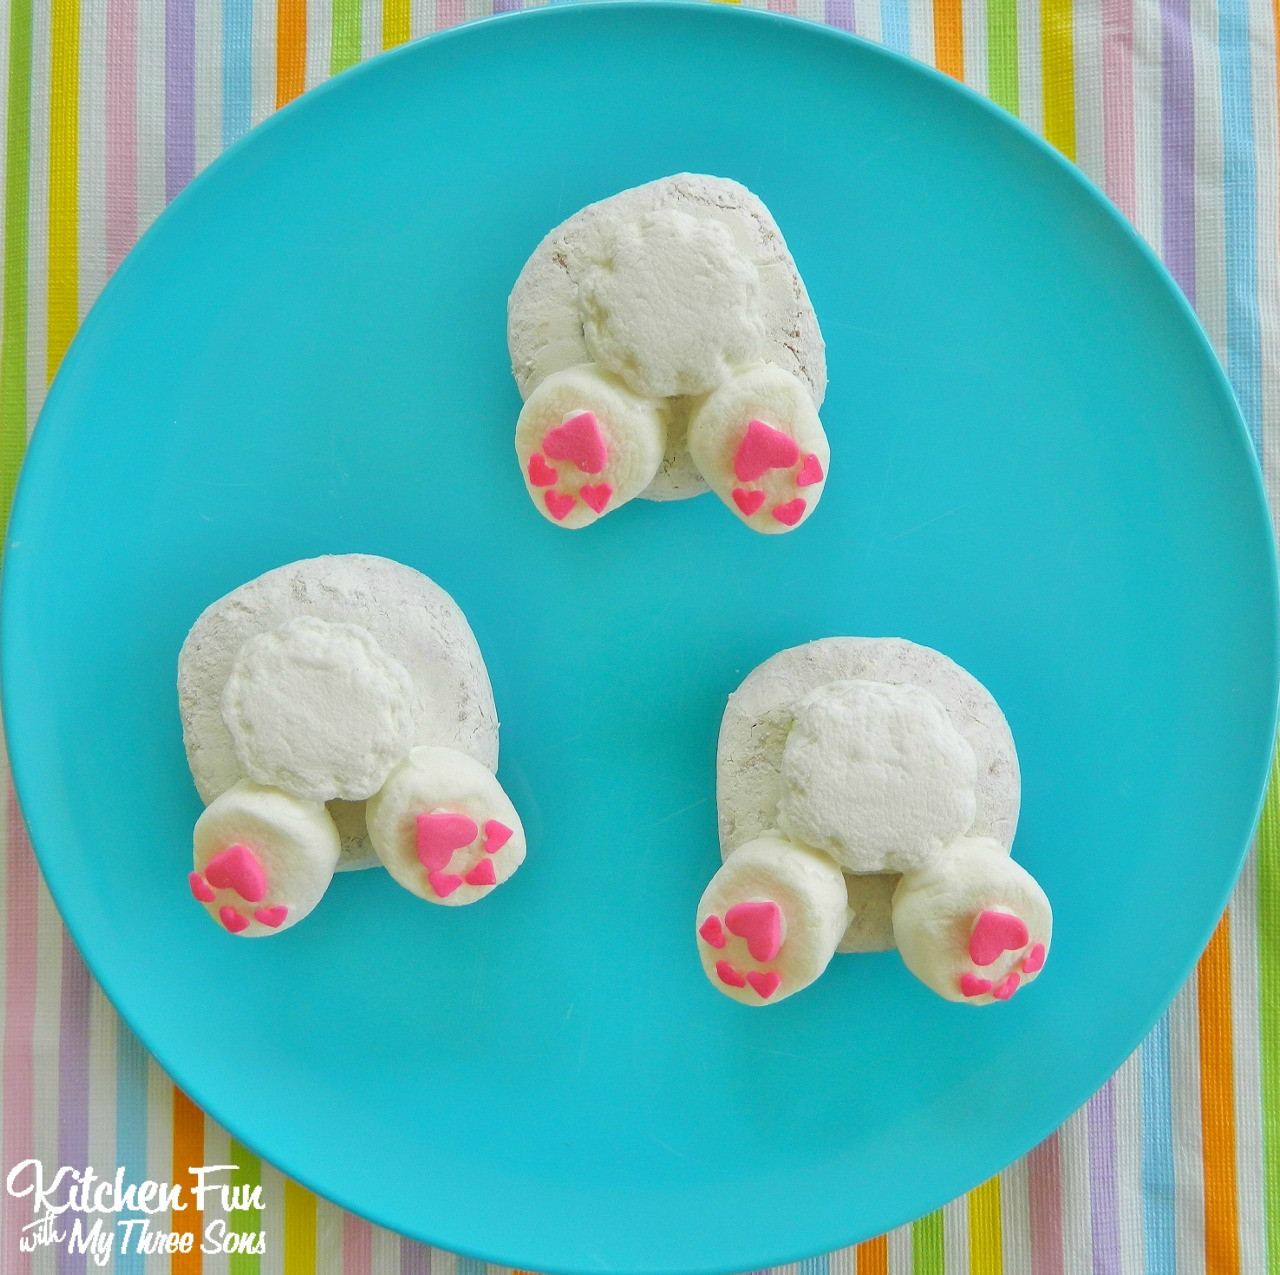 Easter Party Ideas For Preschool
 Kitchen Fun With My 3 Sons Preschool Easter Party with